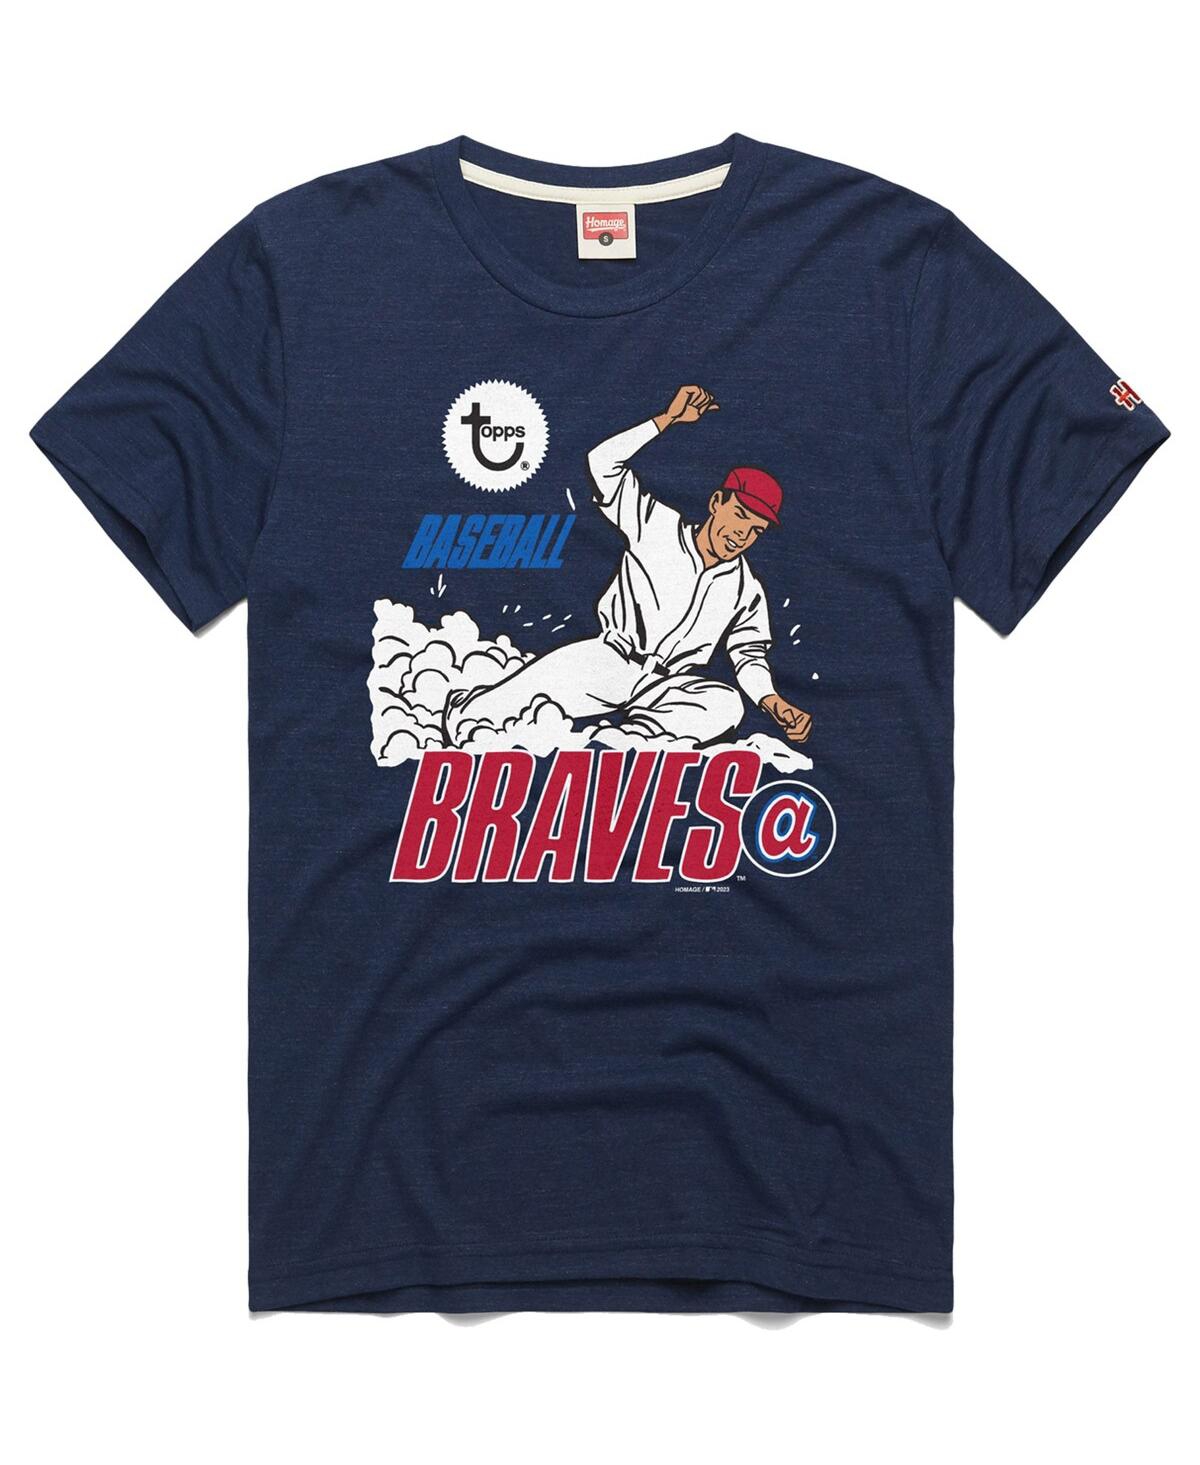 Men's Homage x Topps Navy Atlanta Braves Tri-Blend T-shirt - Navy